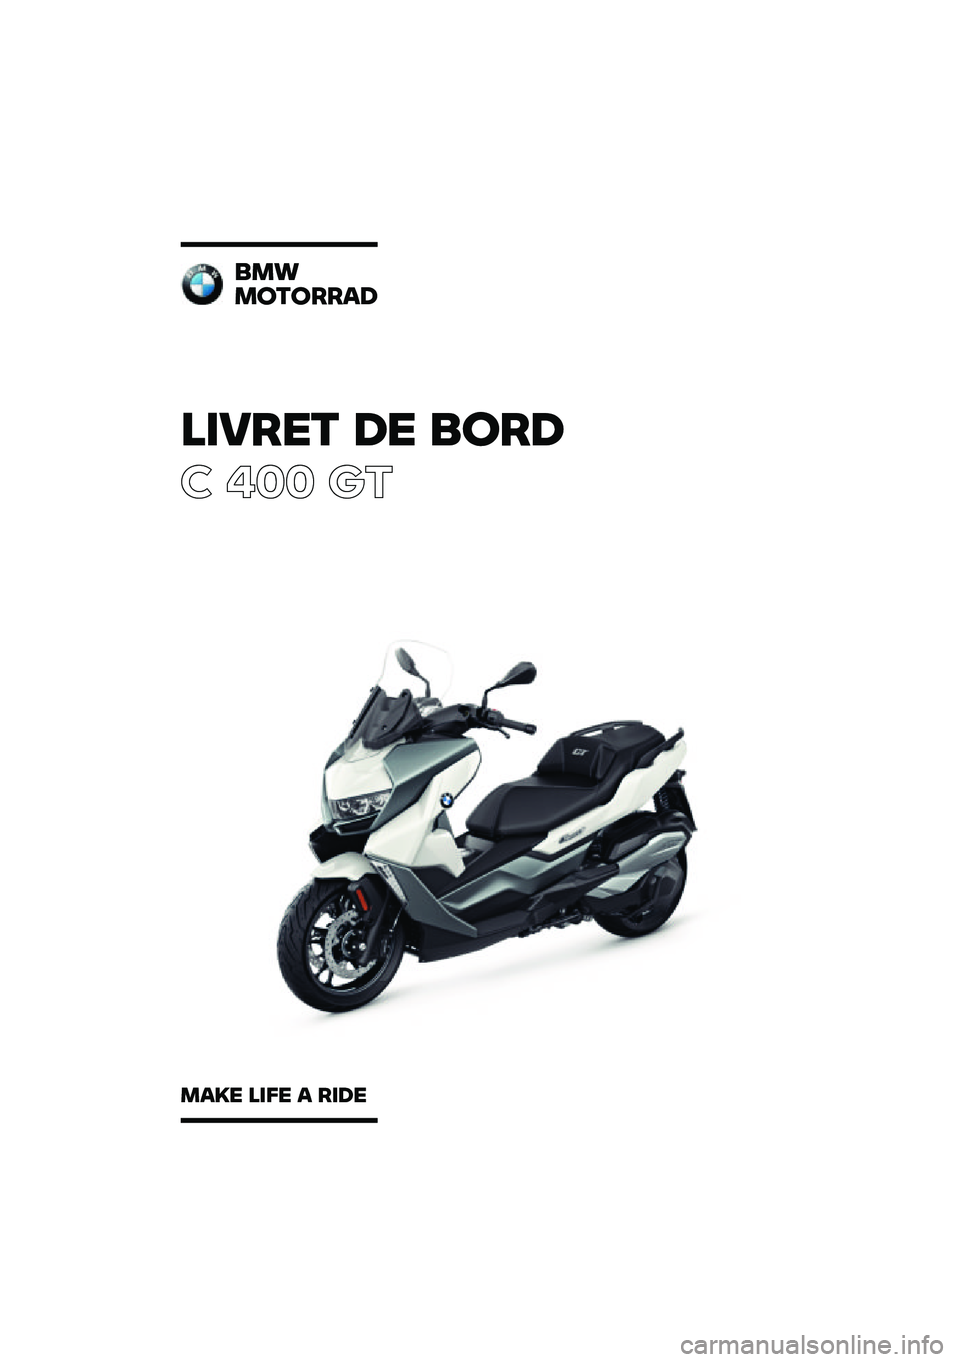 BMW MOTORRAD C 400 GT 2020  Livret de bord (in French) ������ �\b� �	�
��\b
� ��� ��\b
�	��\f
��
��
���
�\b
��
�� ���� �
 ���\b� 